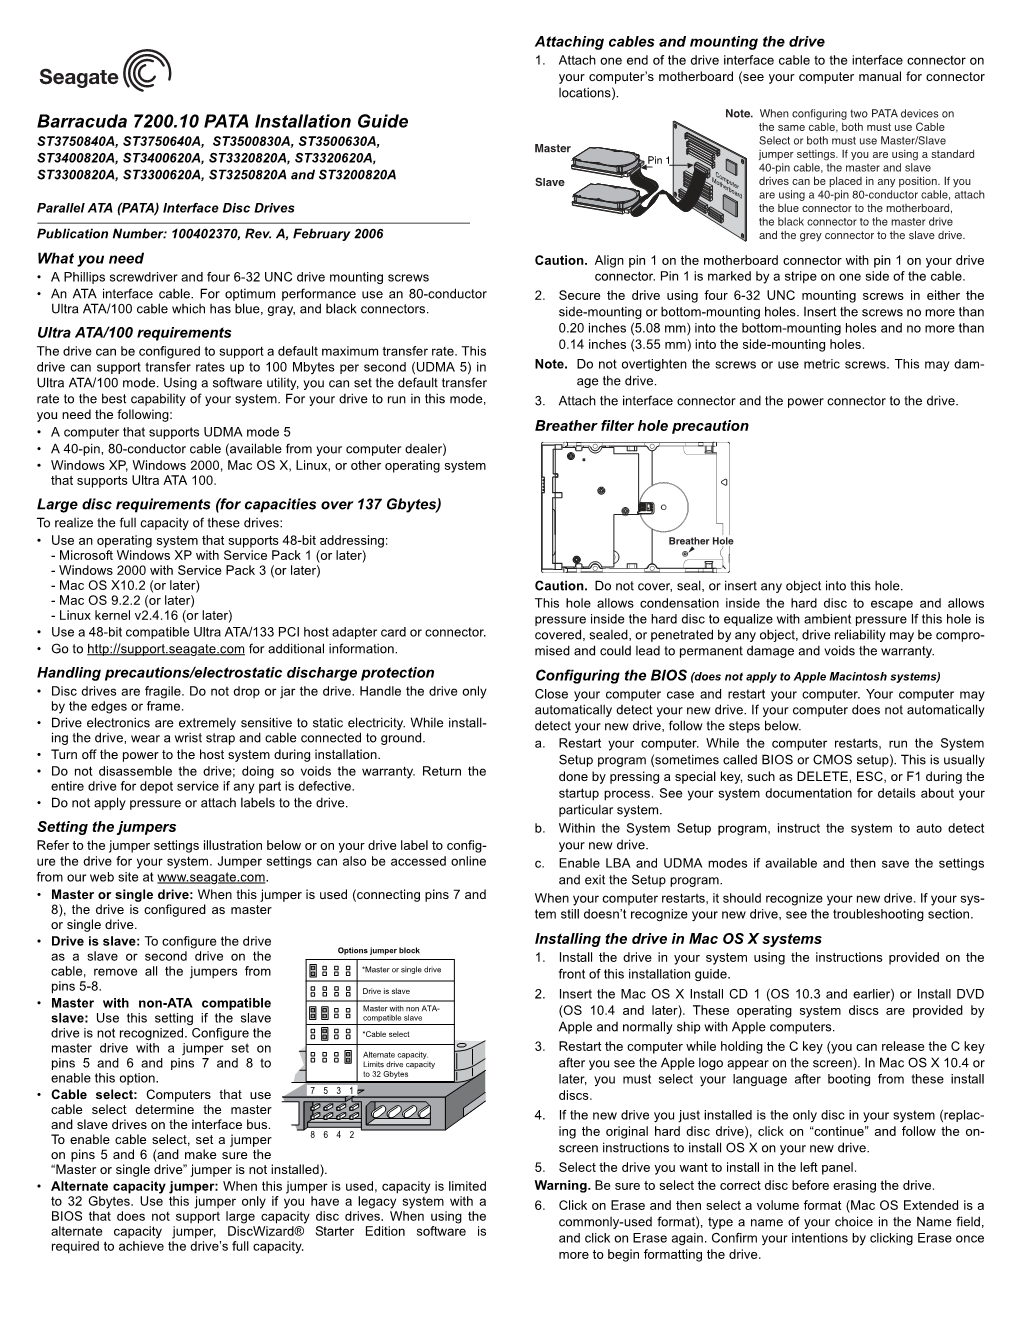 Barracuda 7200.10 PATA Installation Guide